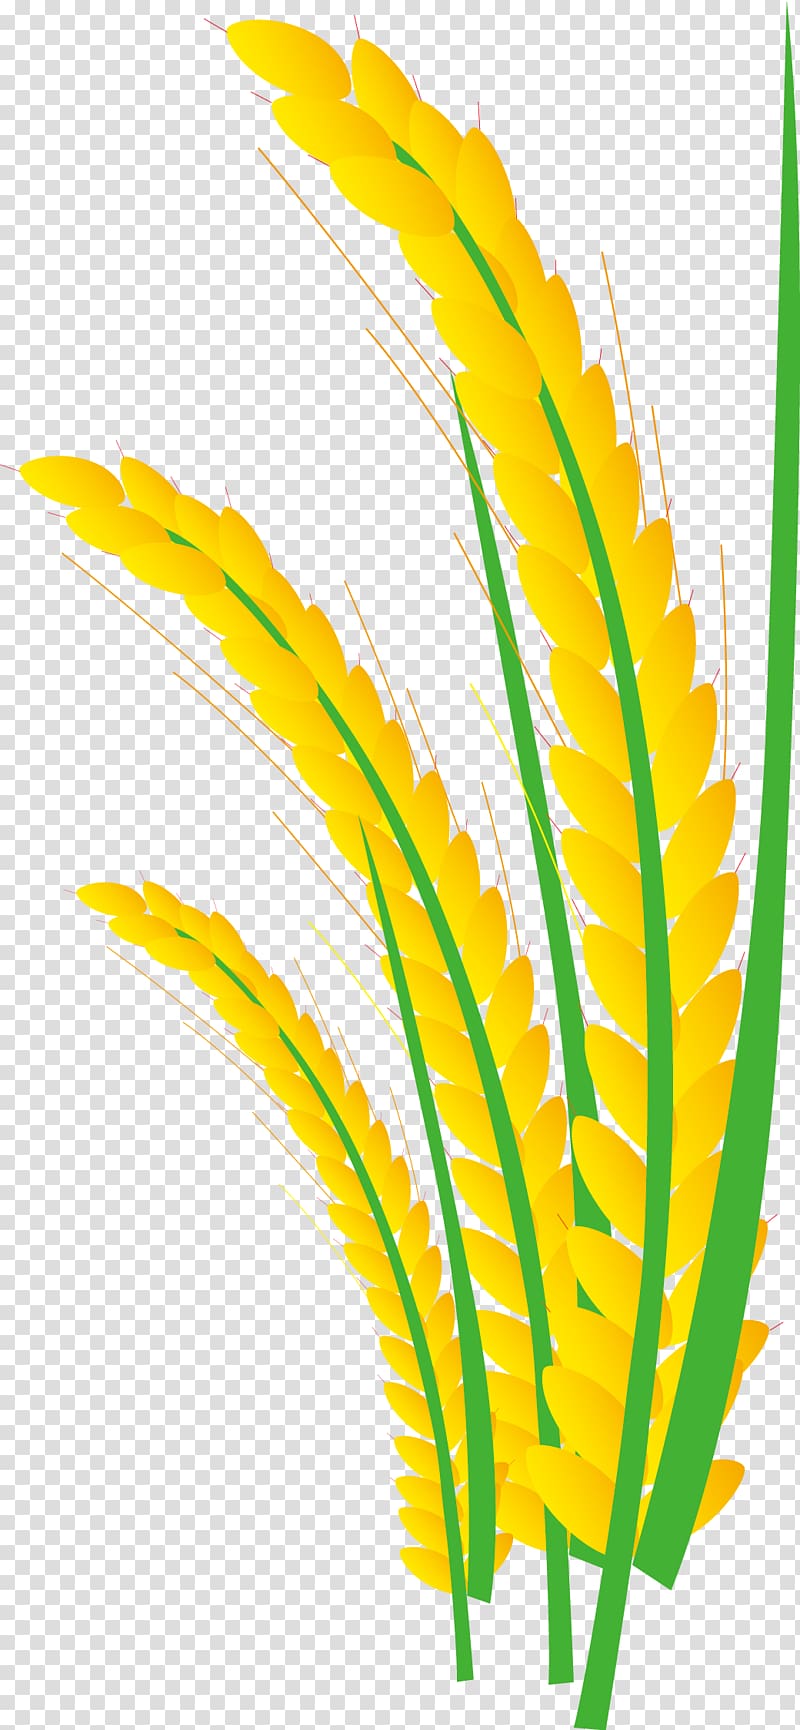 Rice gadu Paddy Field Gratis, paddy,Rice,Rice,Hedao,Rice transparent background PNG clipart